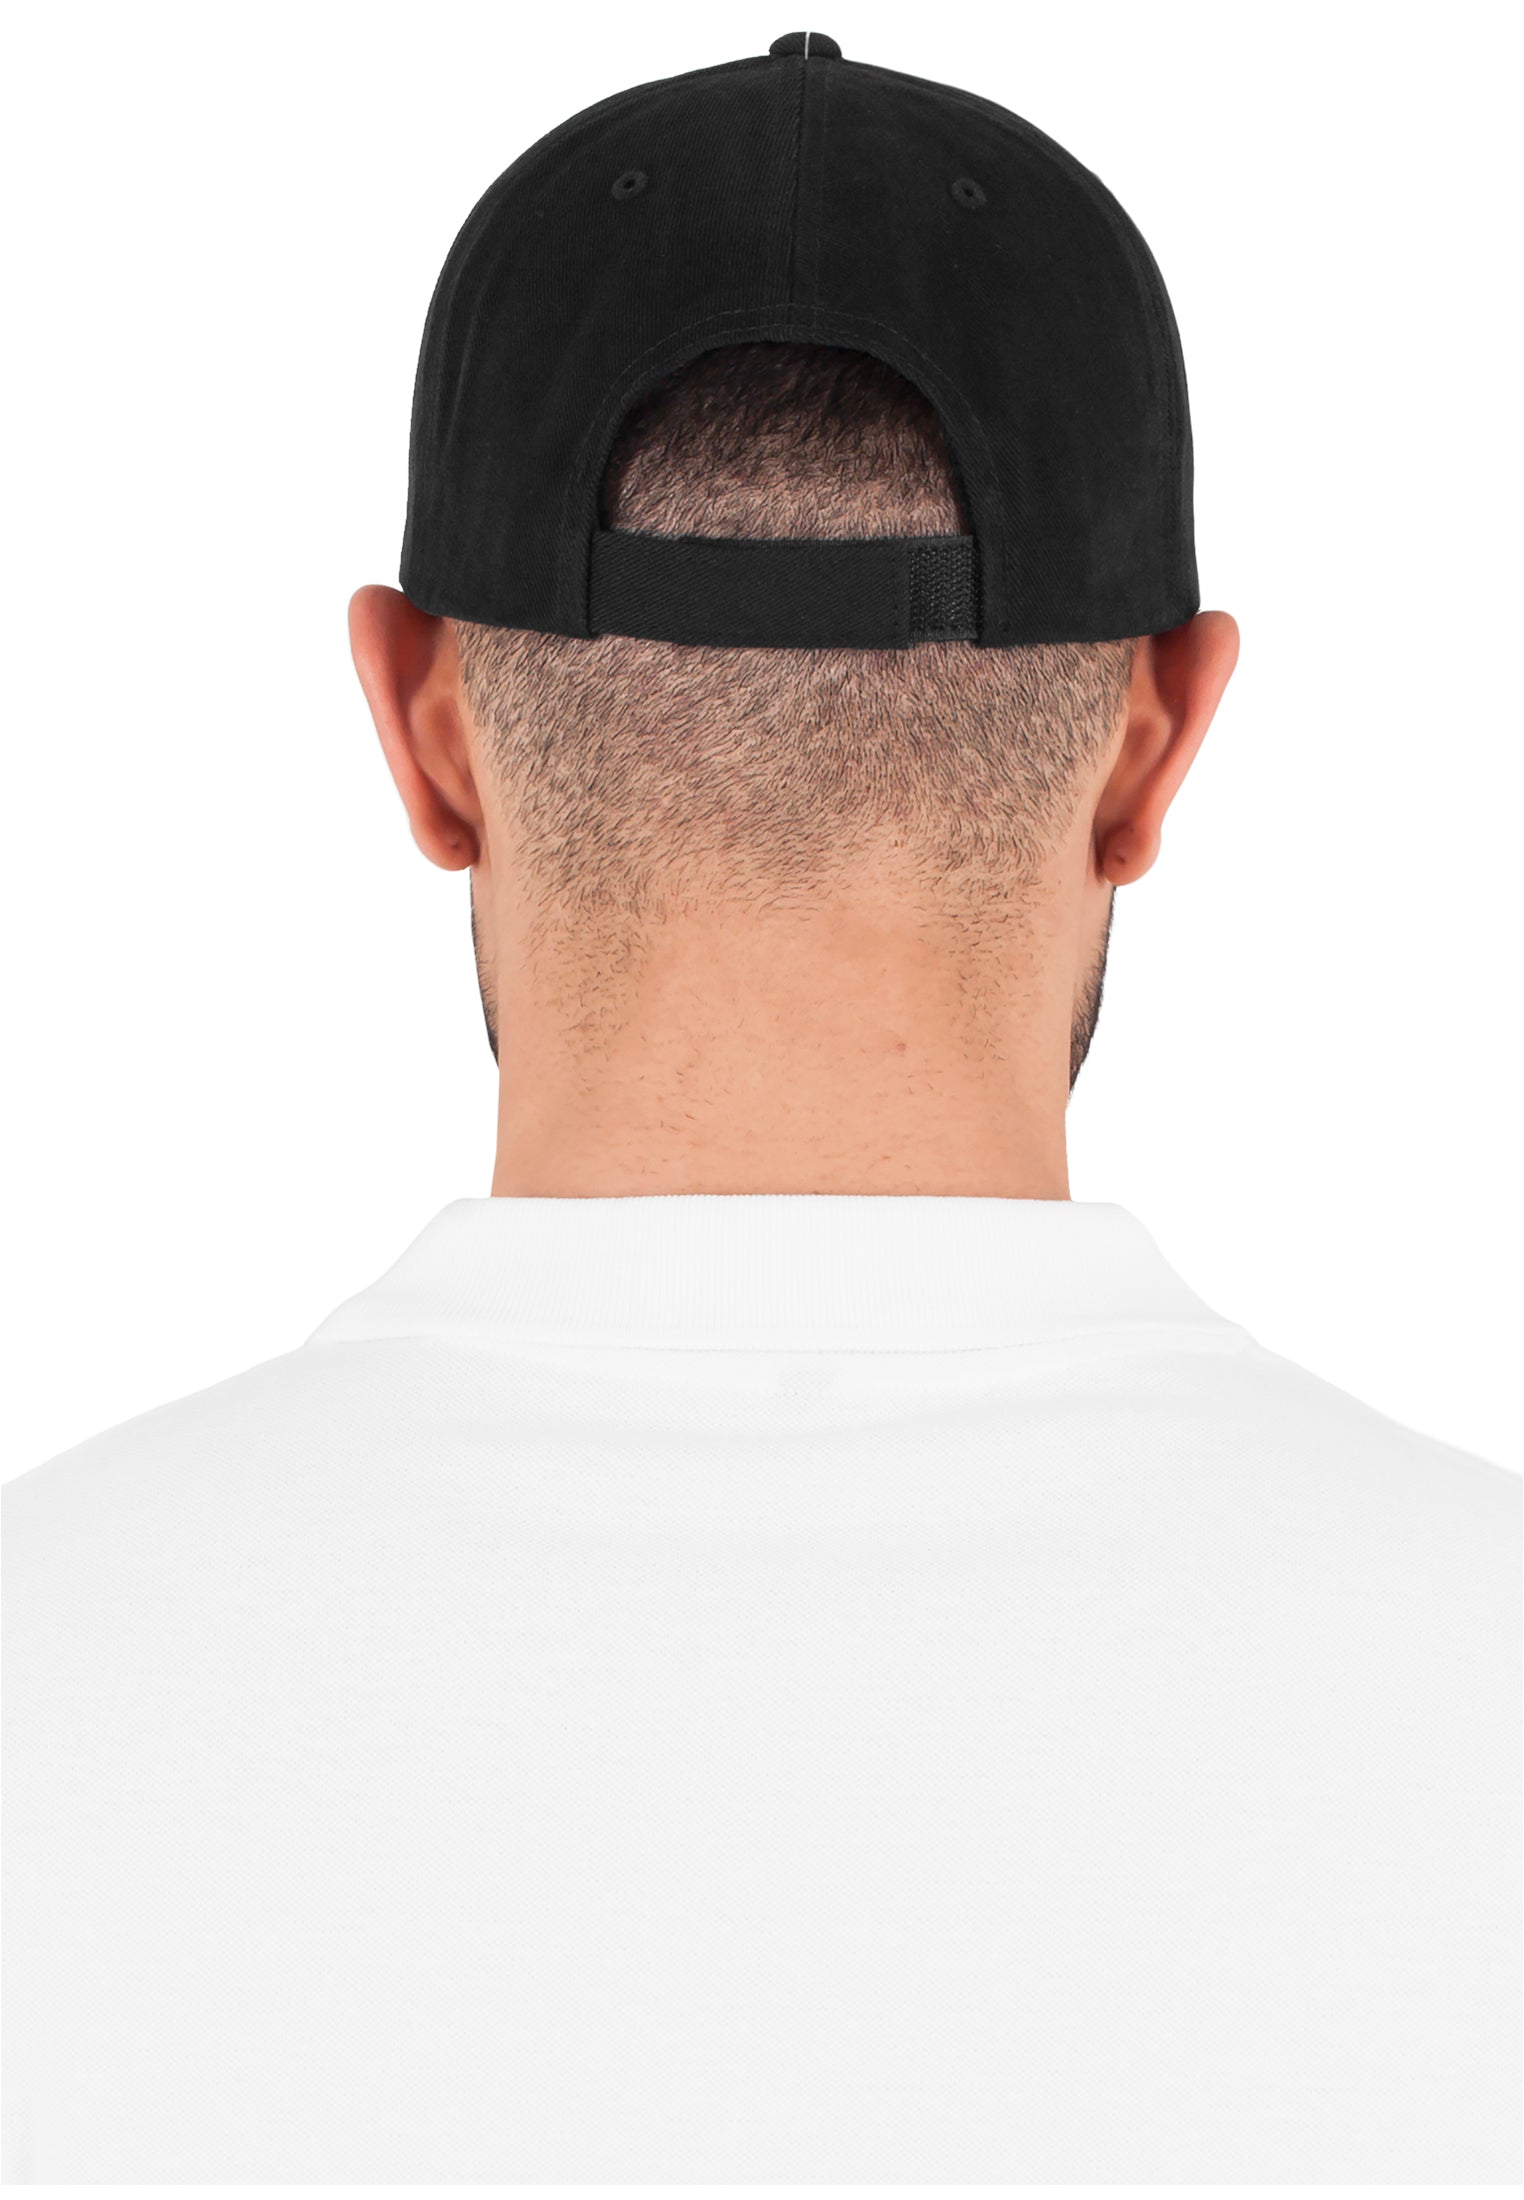 Brushed Cotton Twill Mid-Profile - Black - Headz Up 